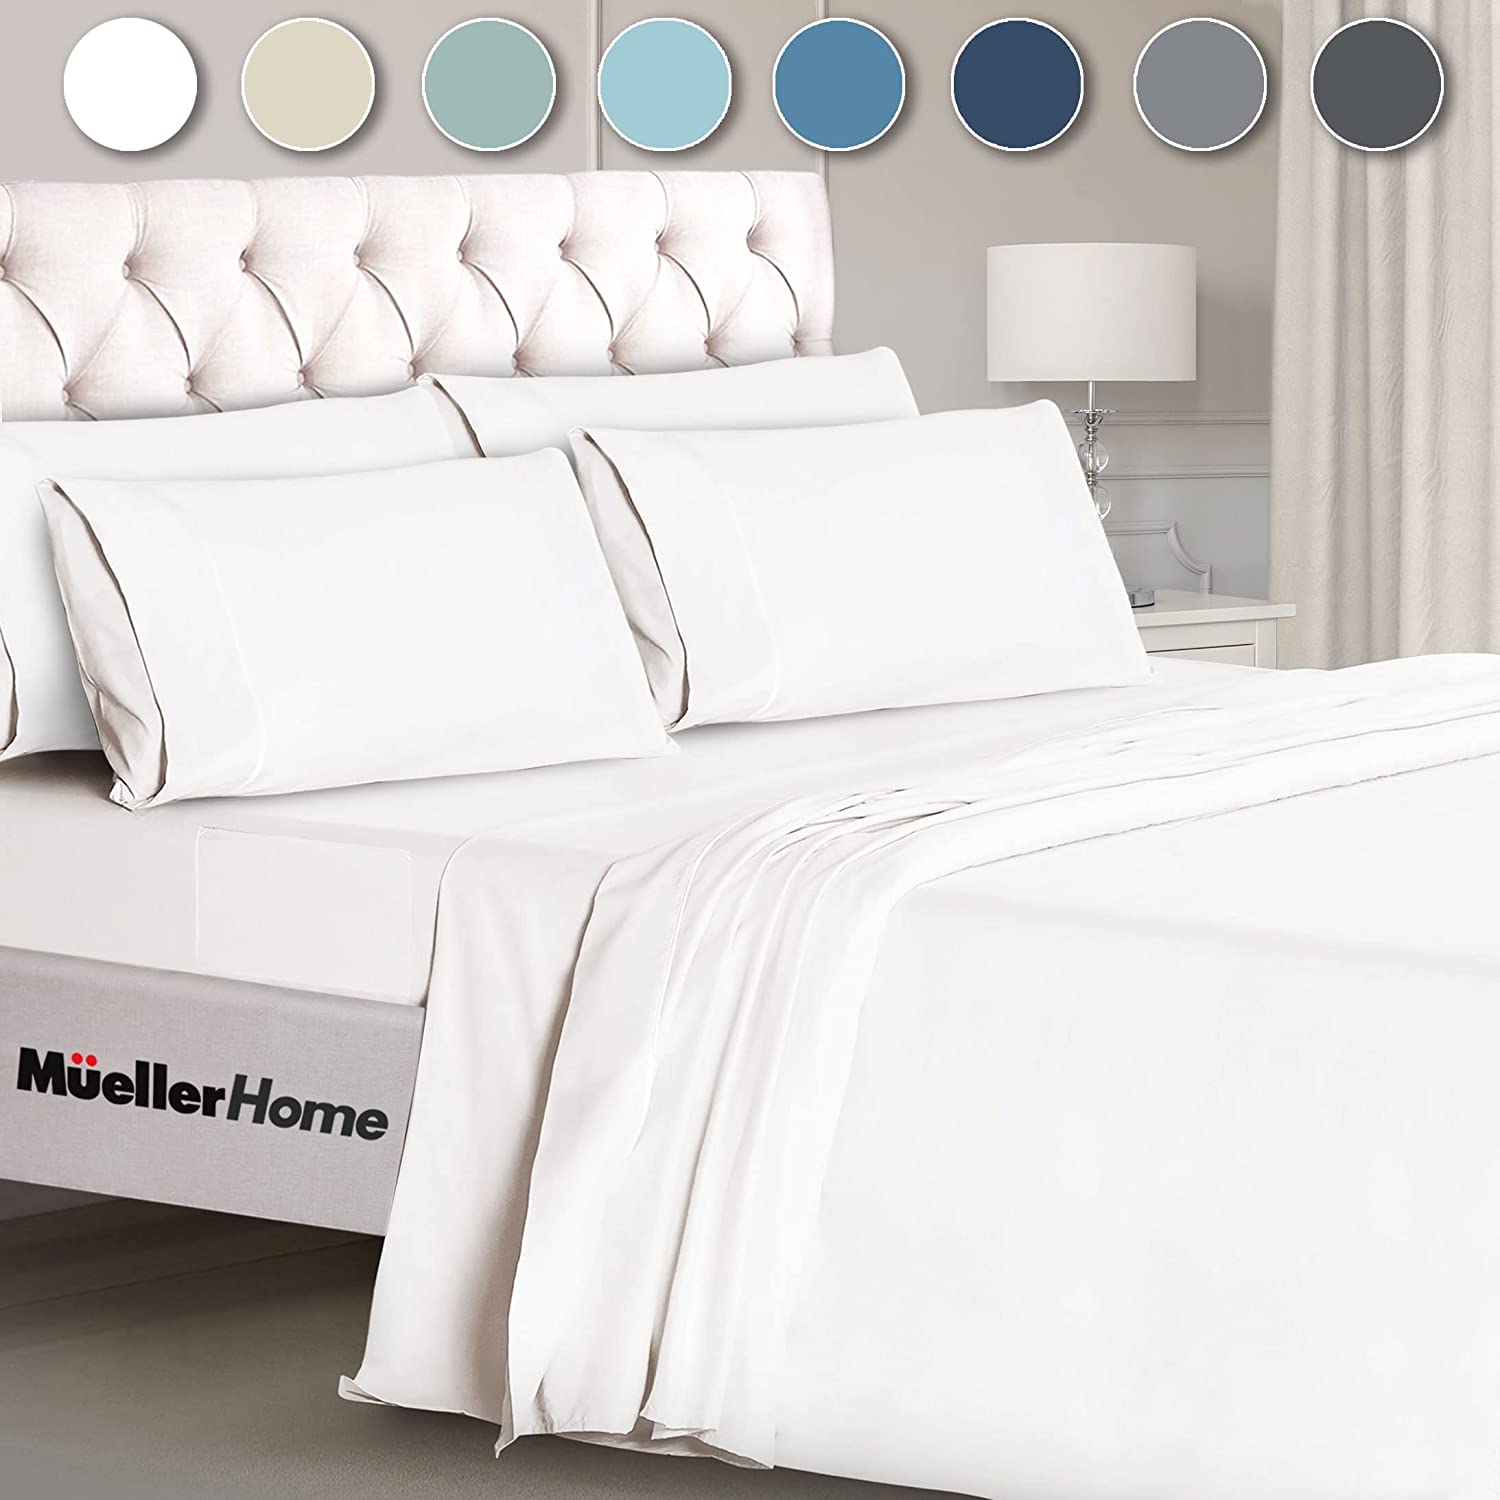 muellerhome_Premium-Hotel-Collection-6-Piece-FULL-SIZE-Sheet-Set-White